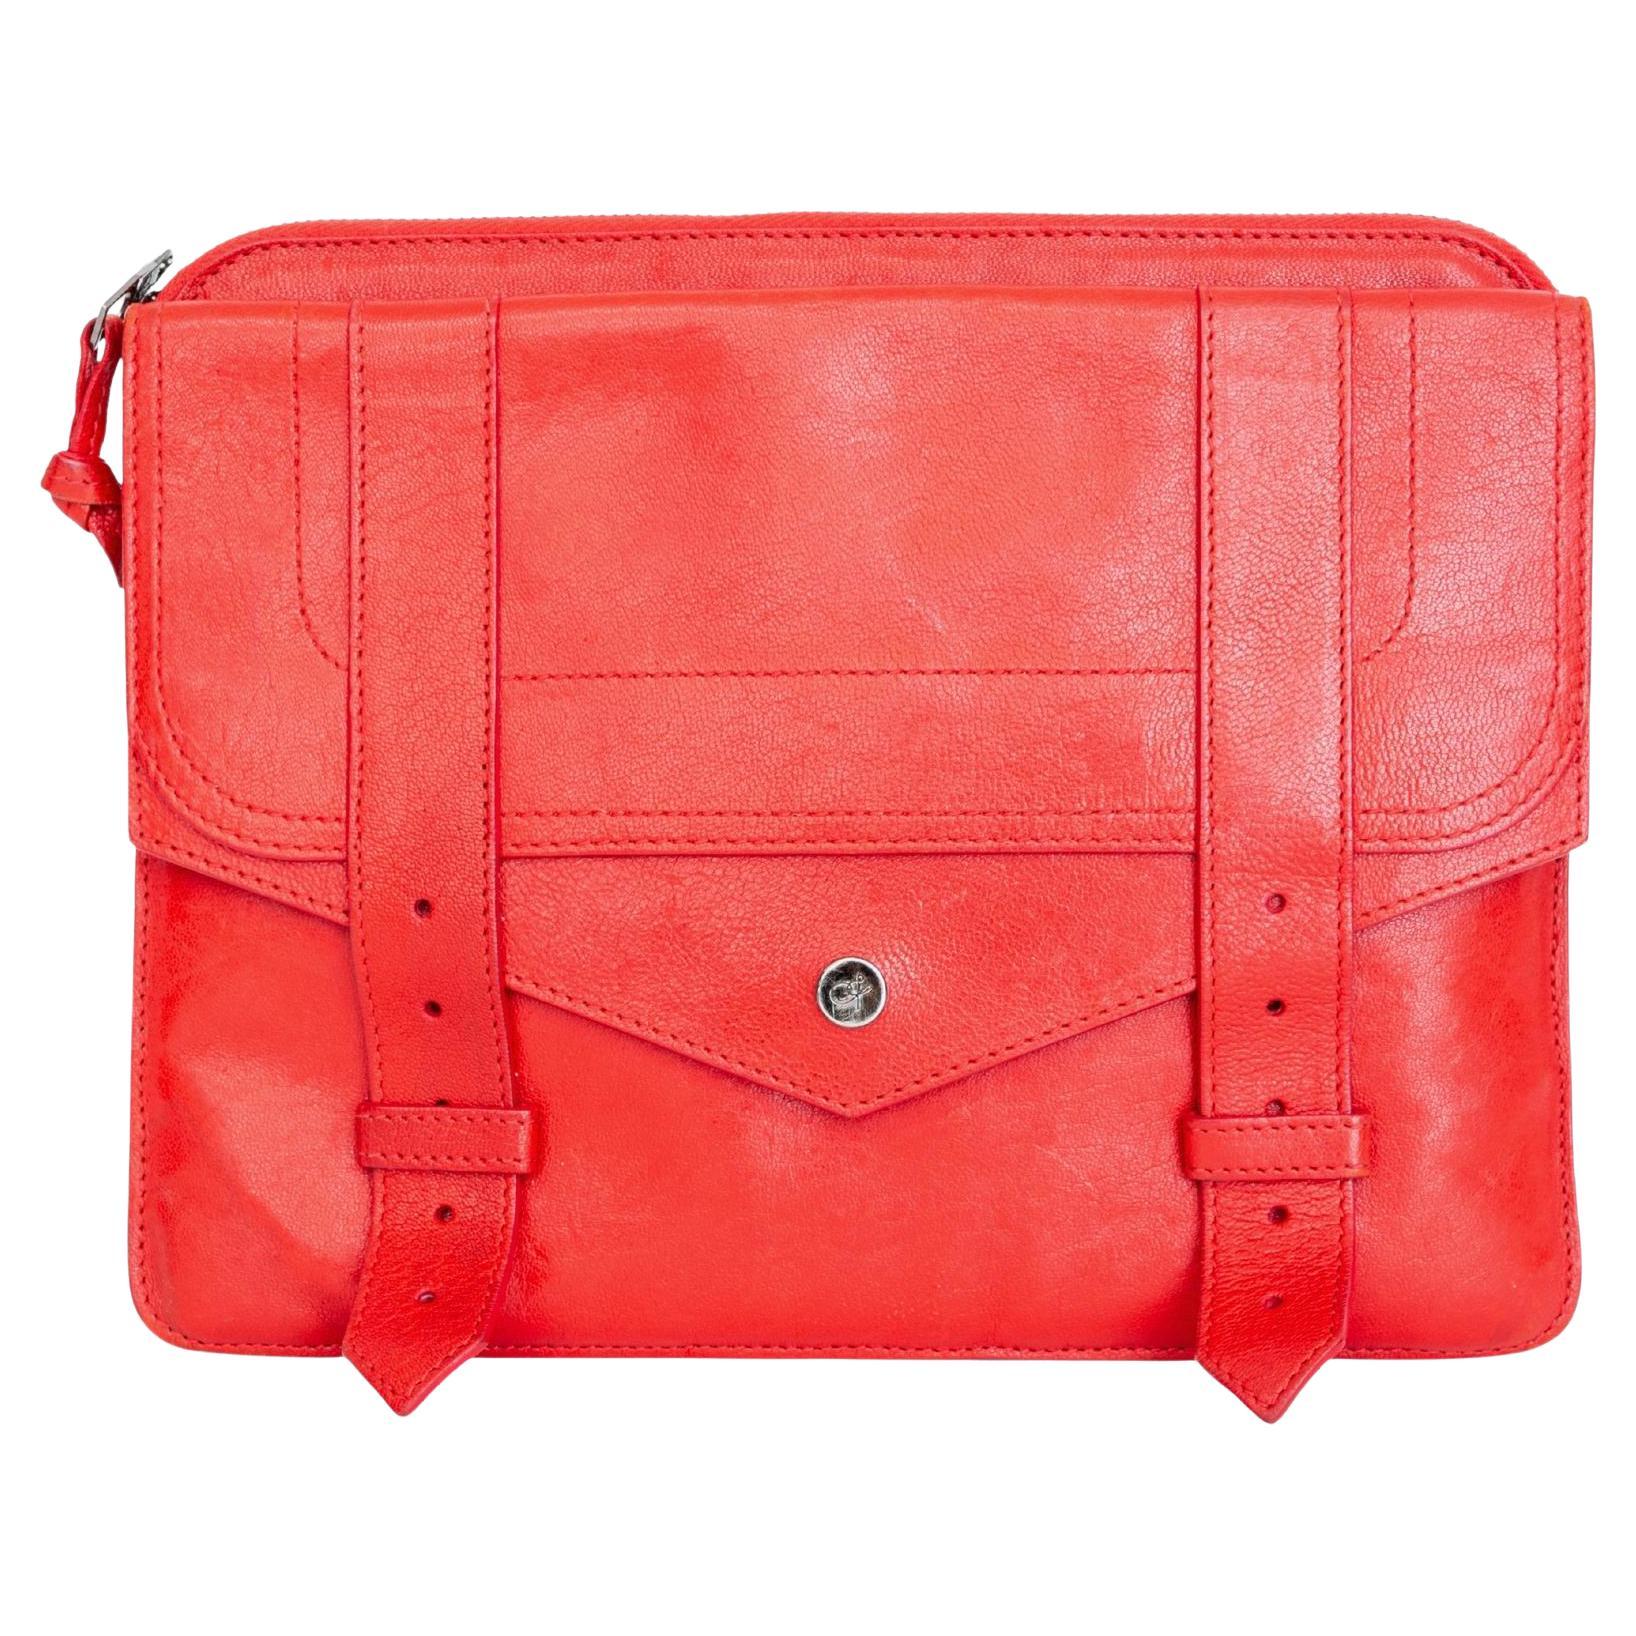 Proenza Schouler iPad-Etui aus rotem Leder